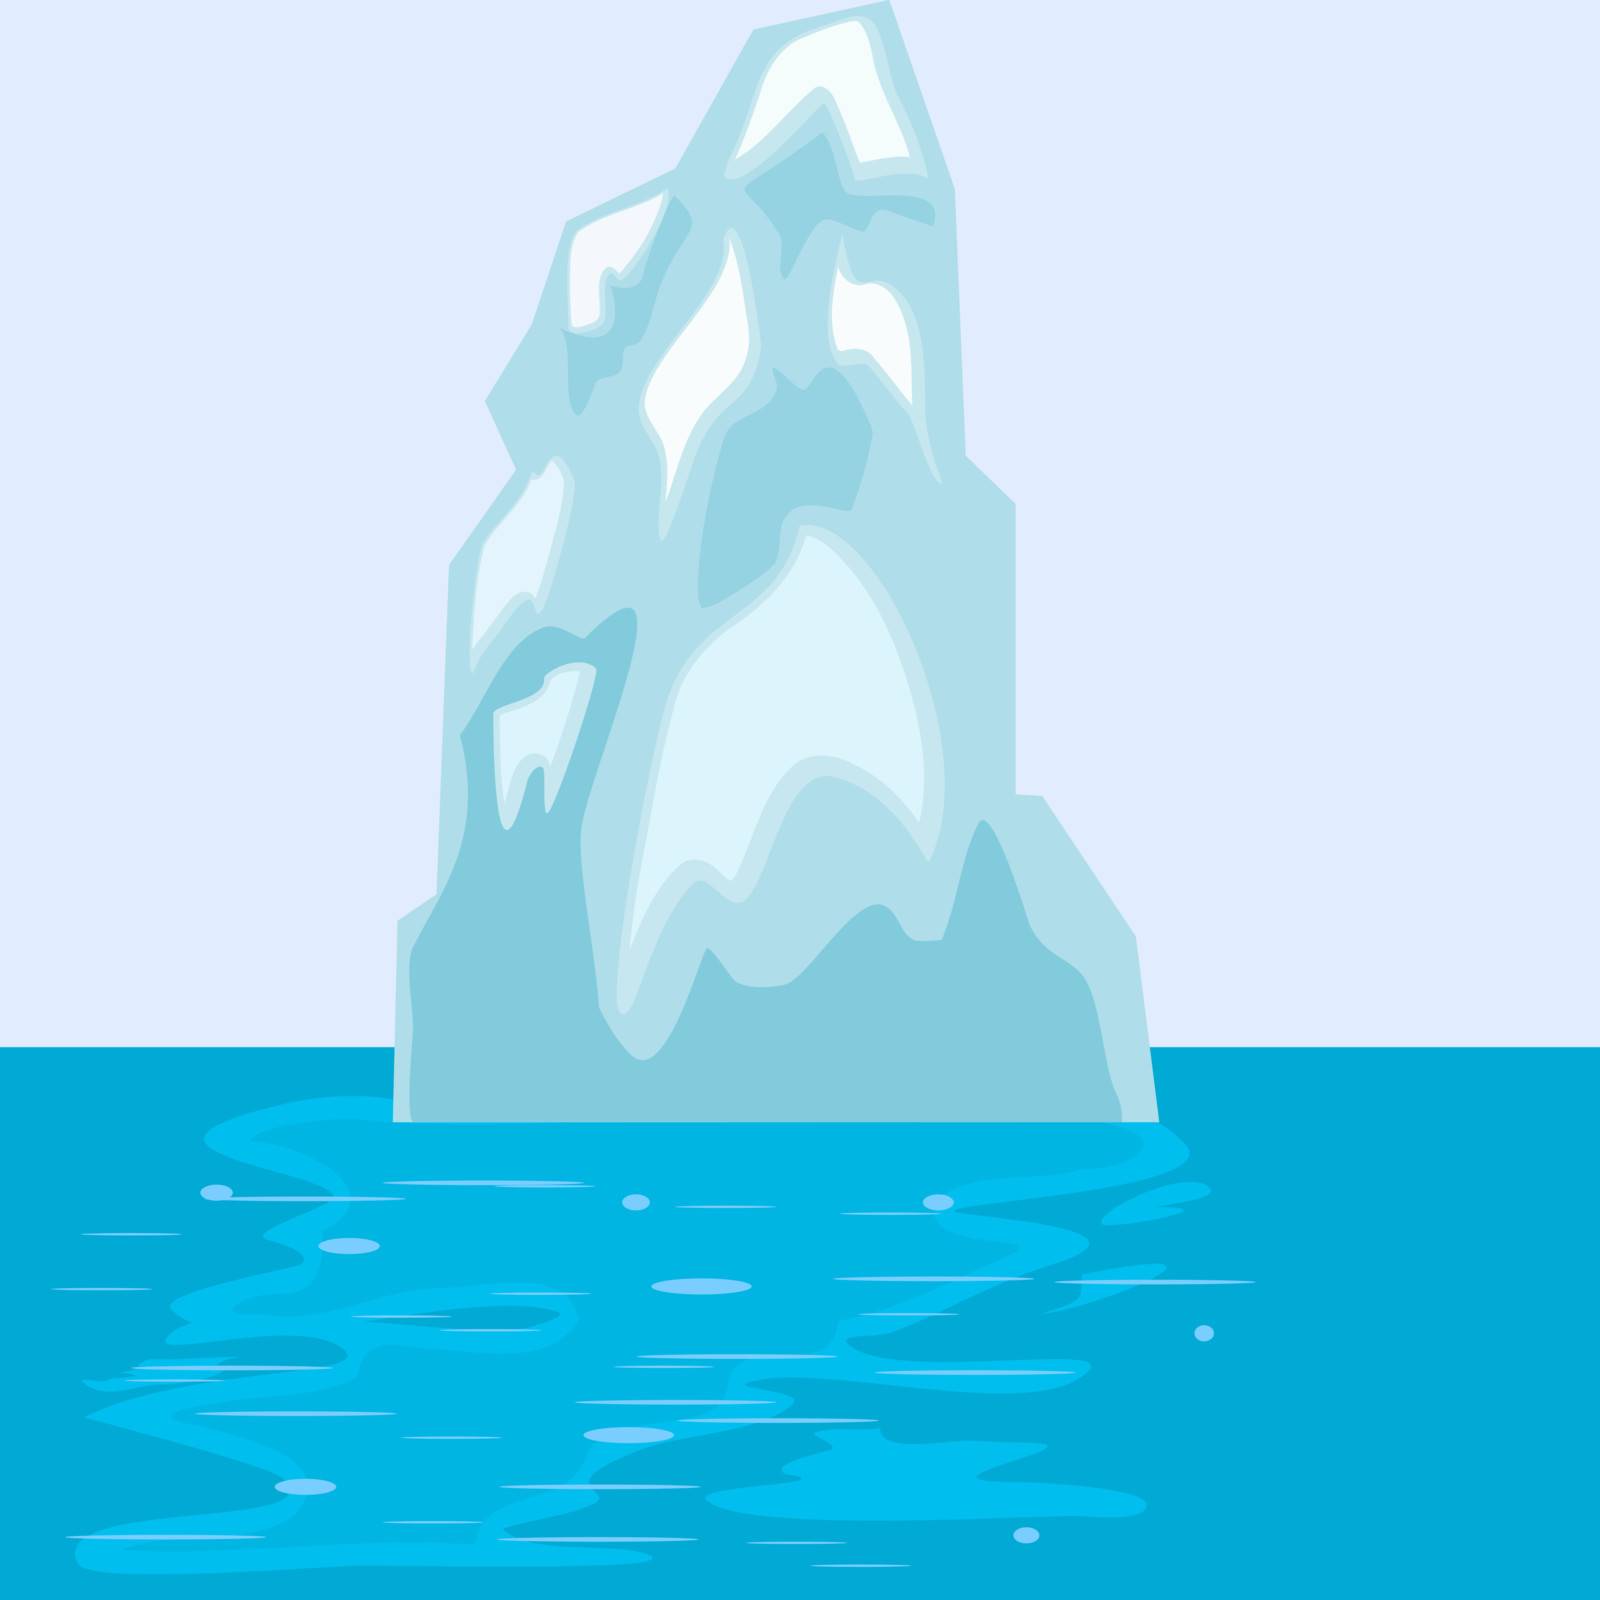 Iceberg in the sea. eps10 by Larser